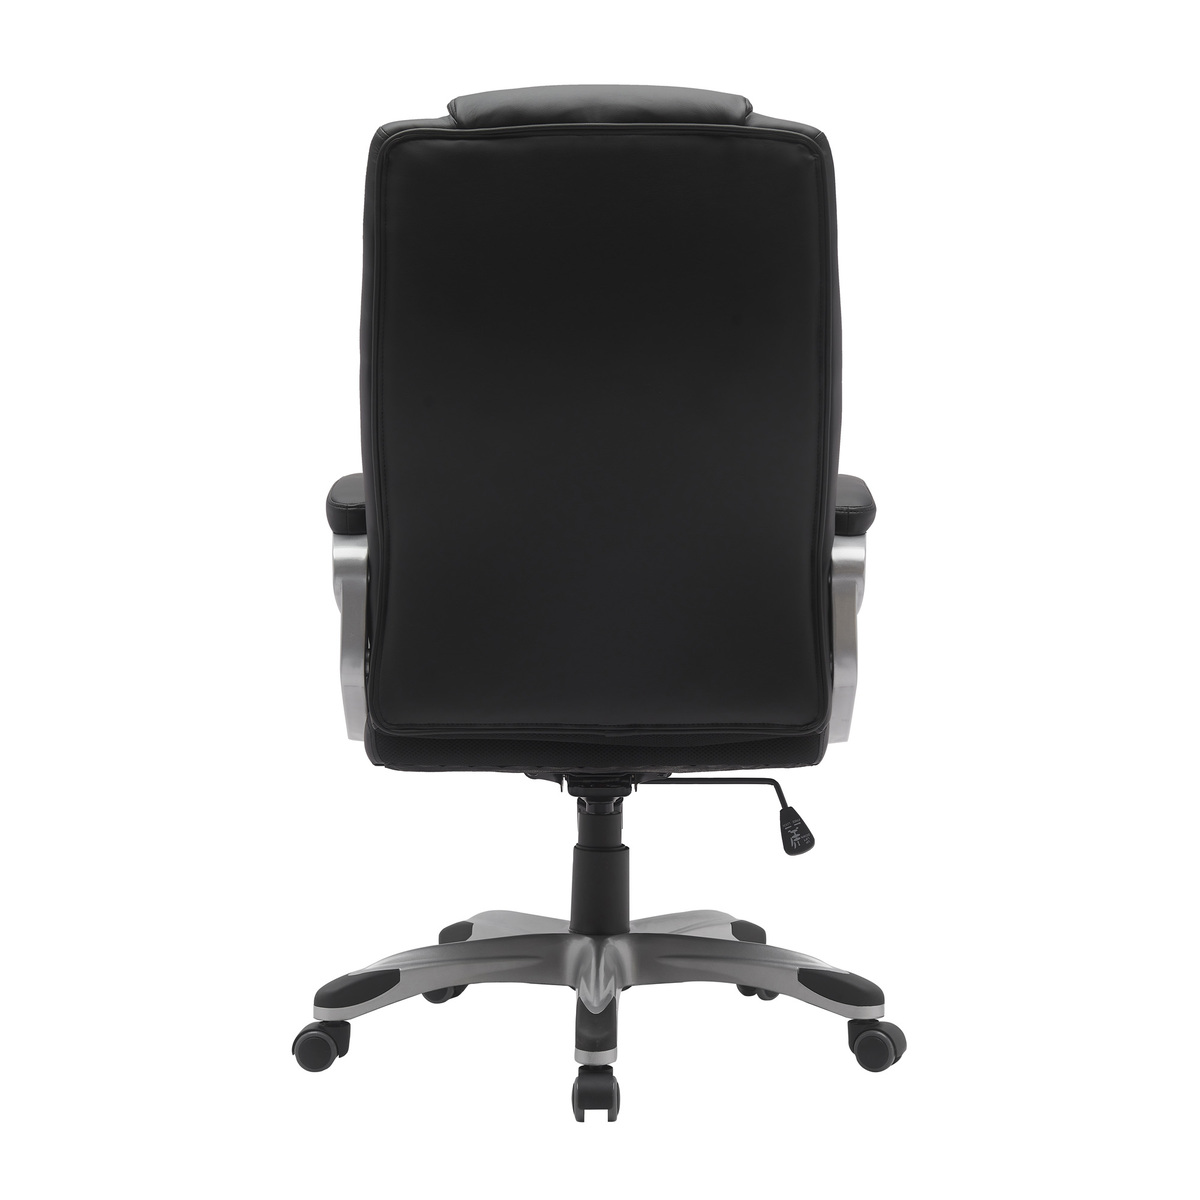 Maple Leaf Executive High Back Office Chair Black BS1303